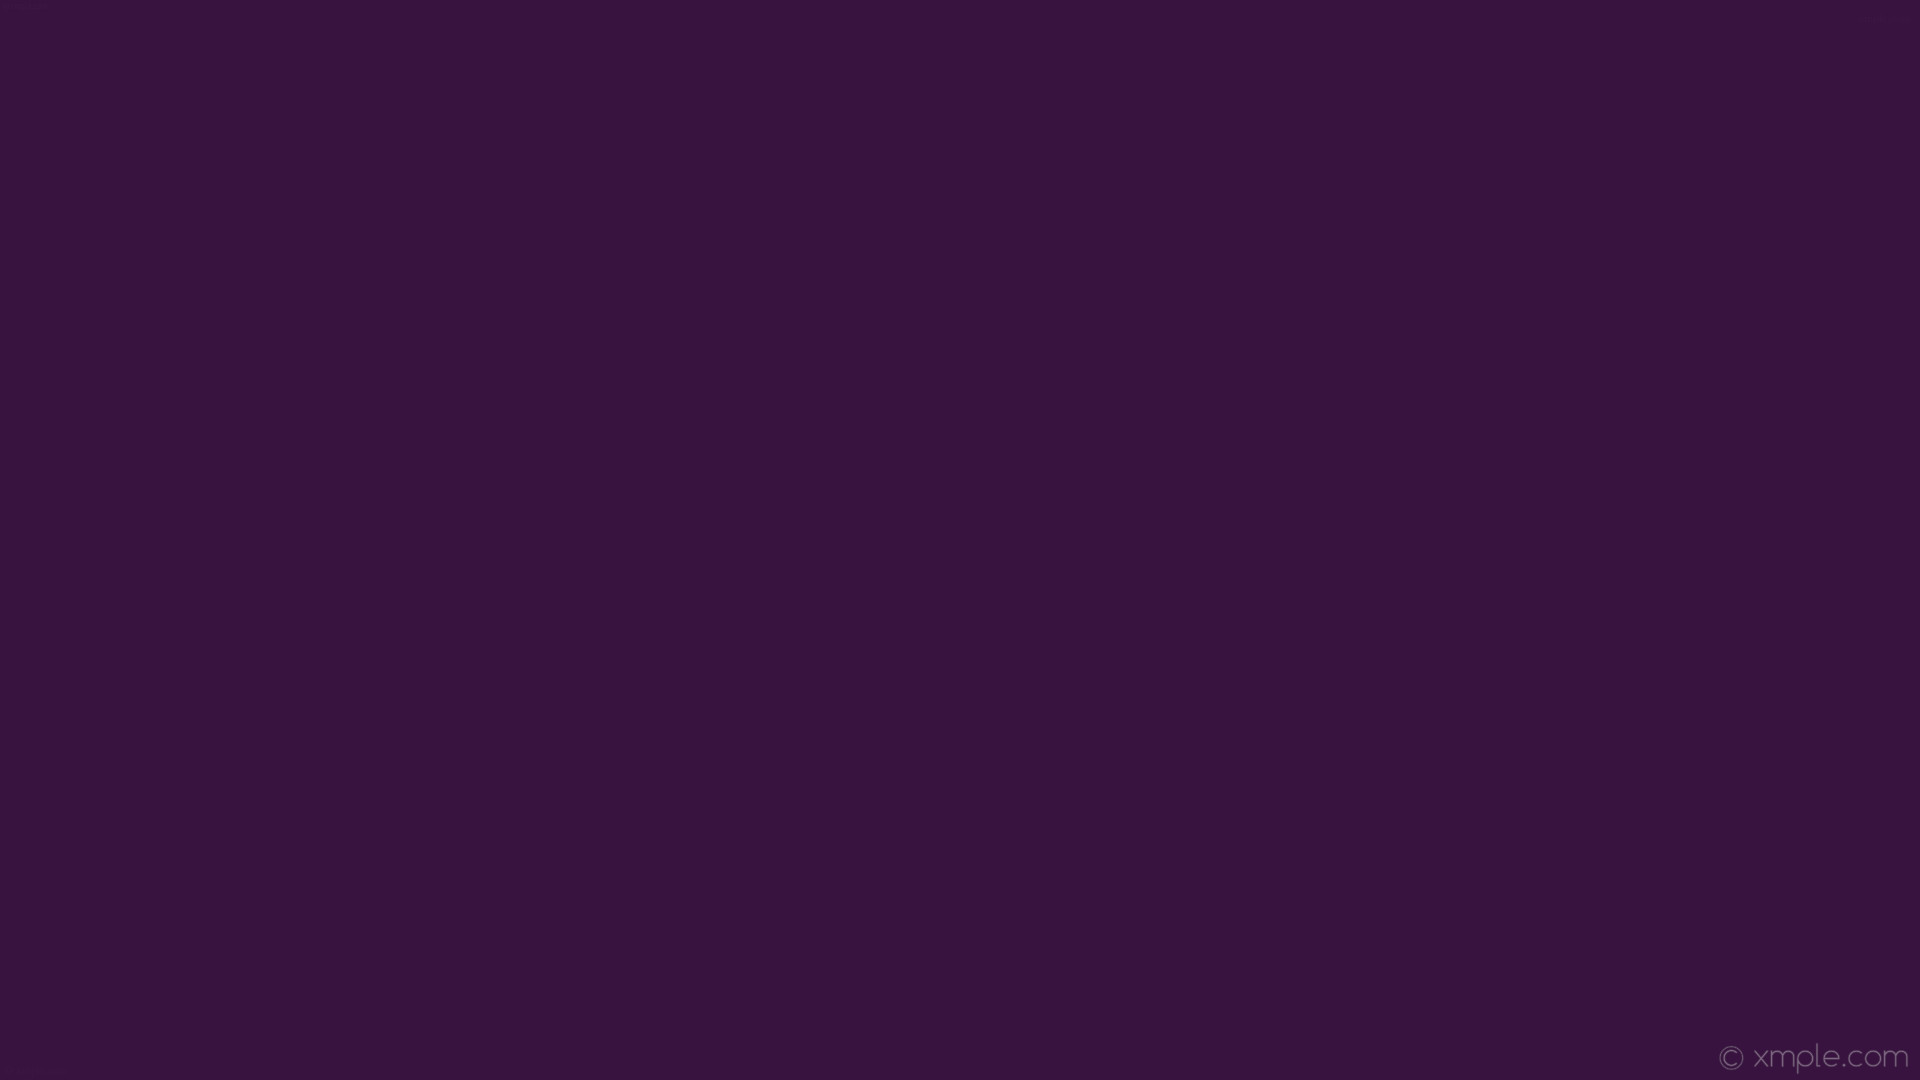 Dark Solid Purple